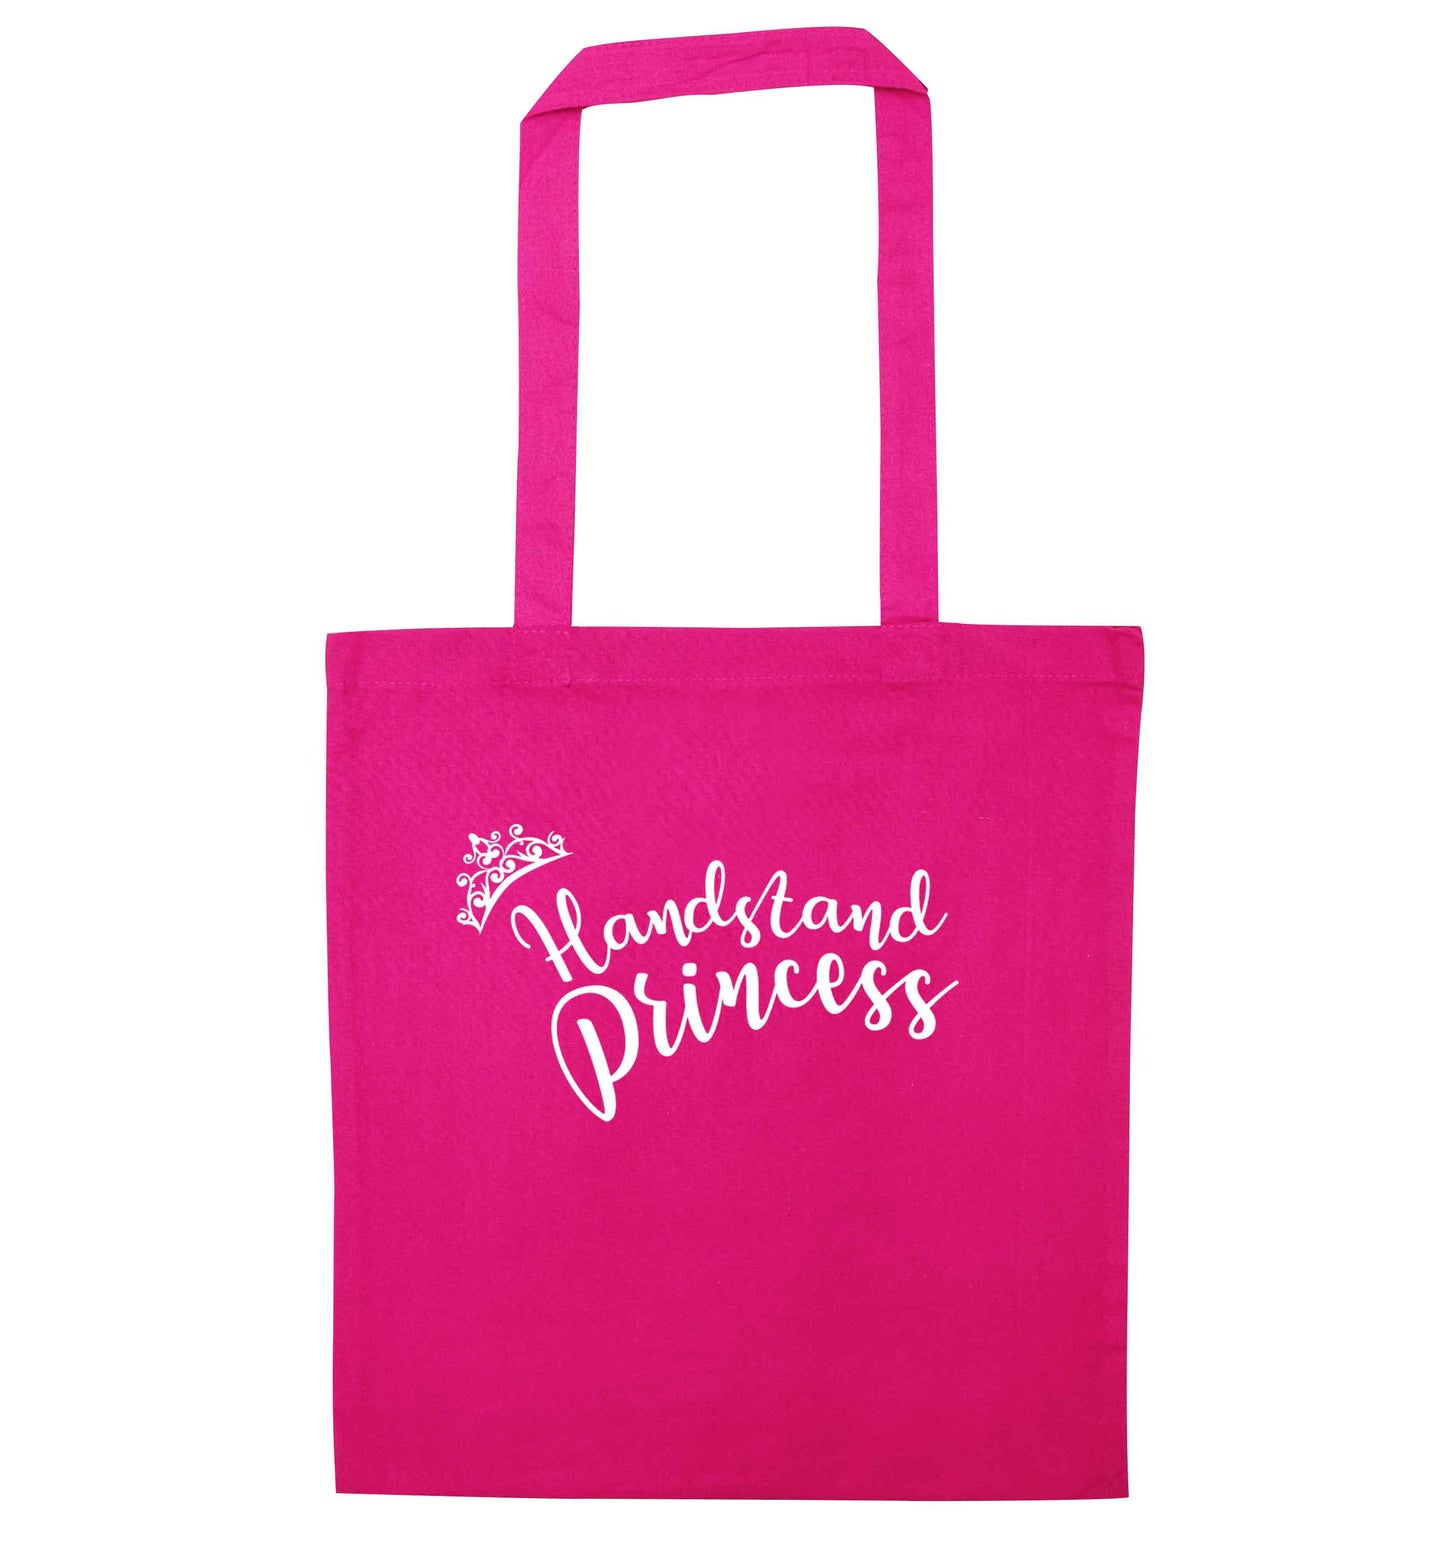 Handstand princess pink tote bag